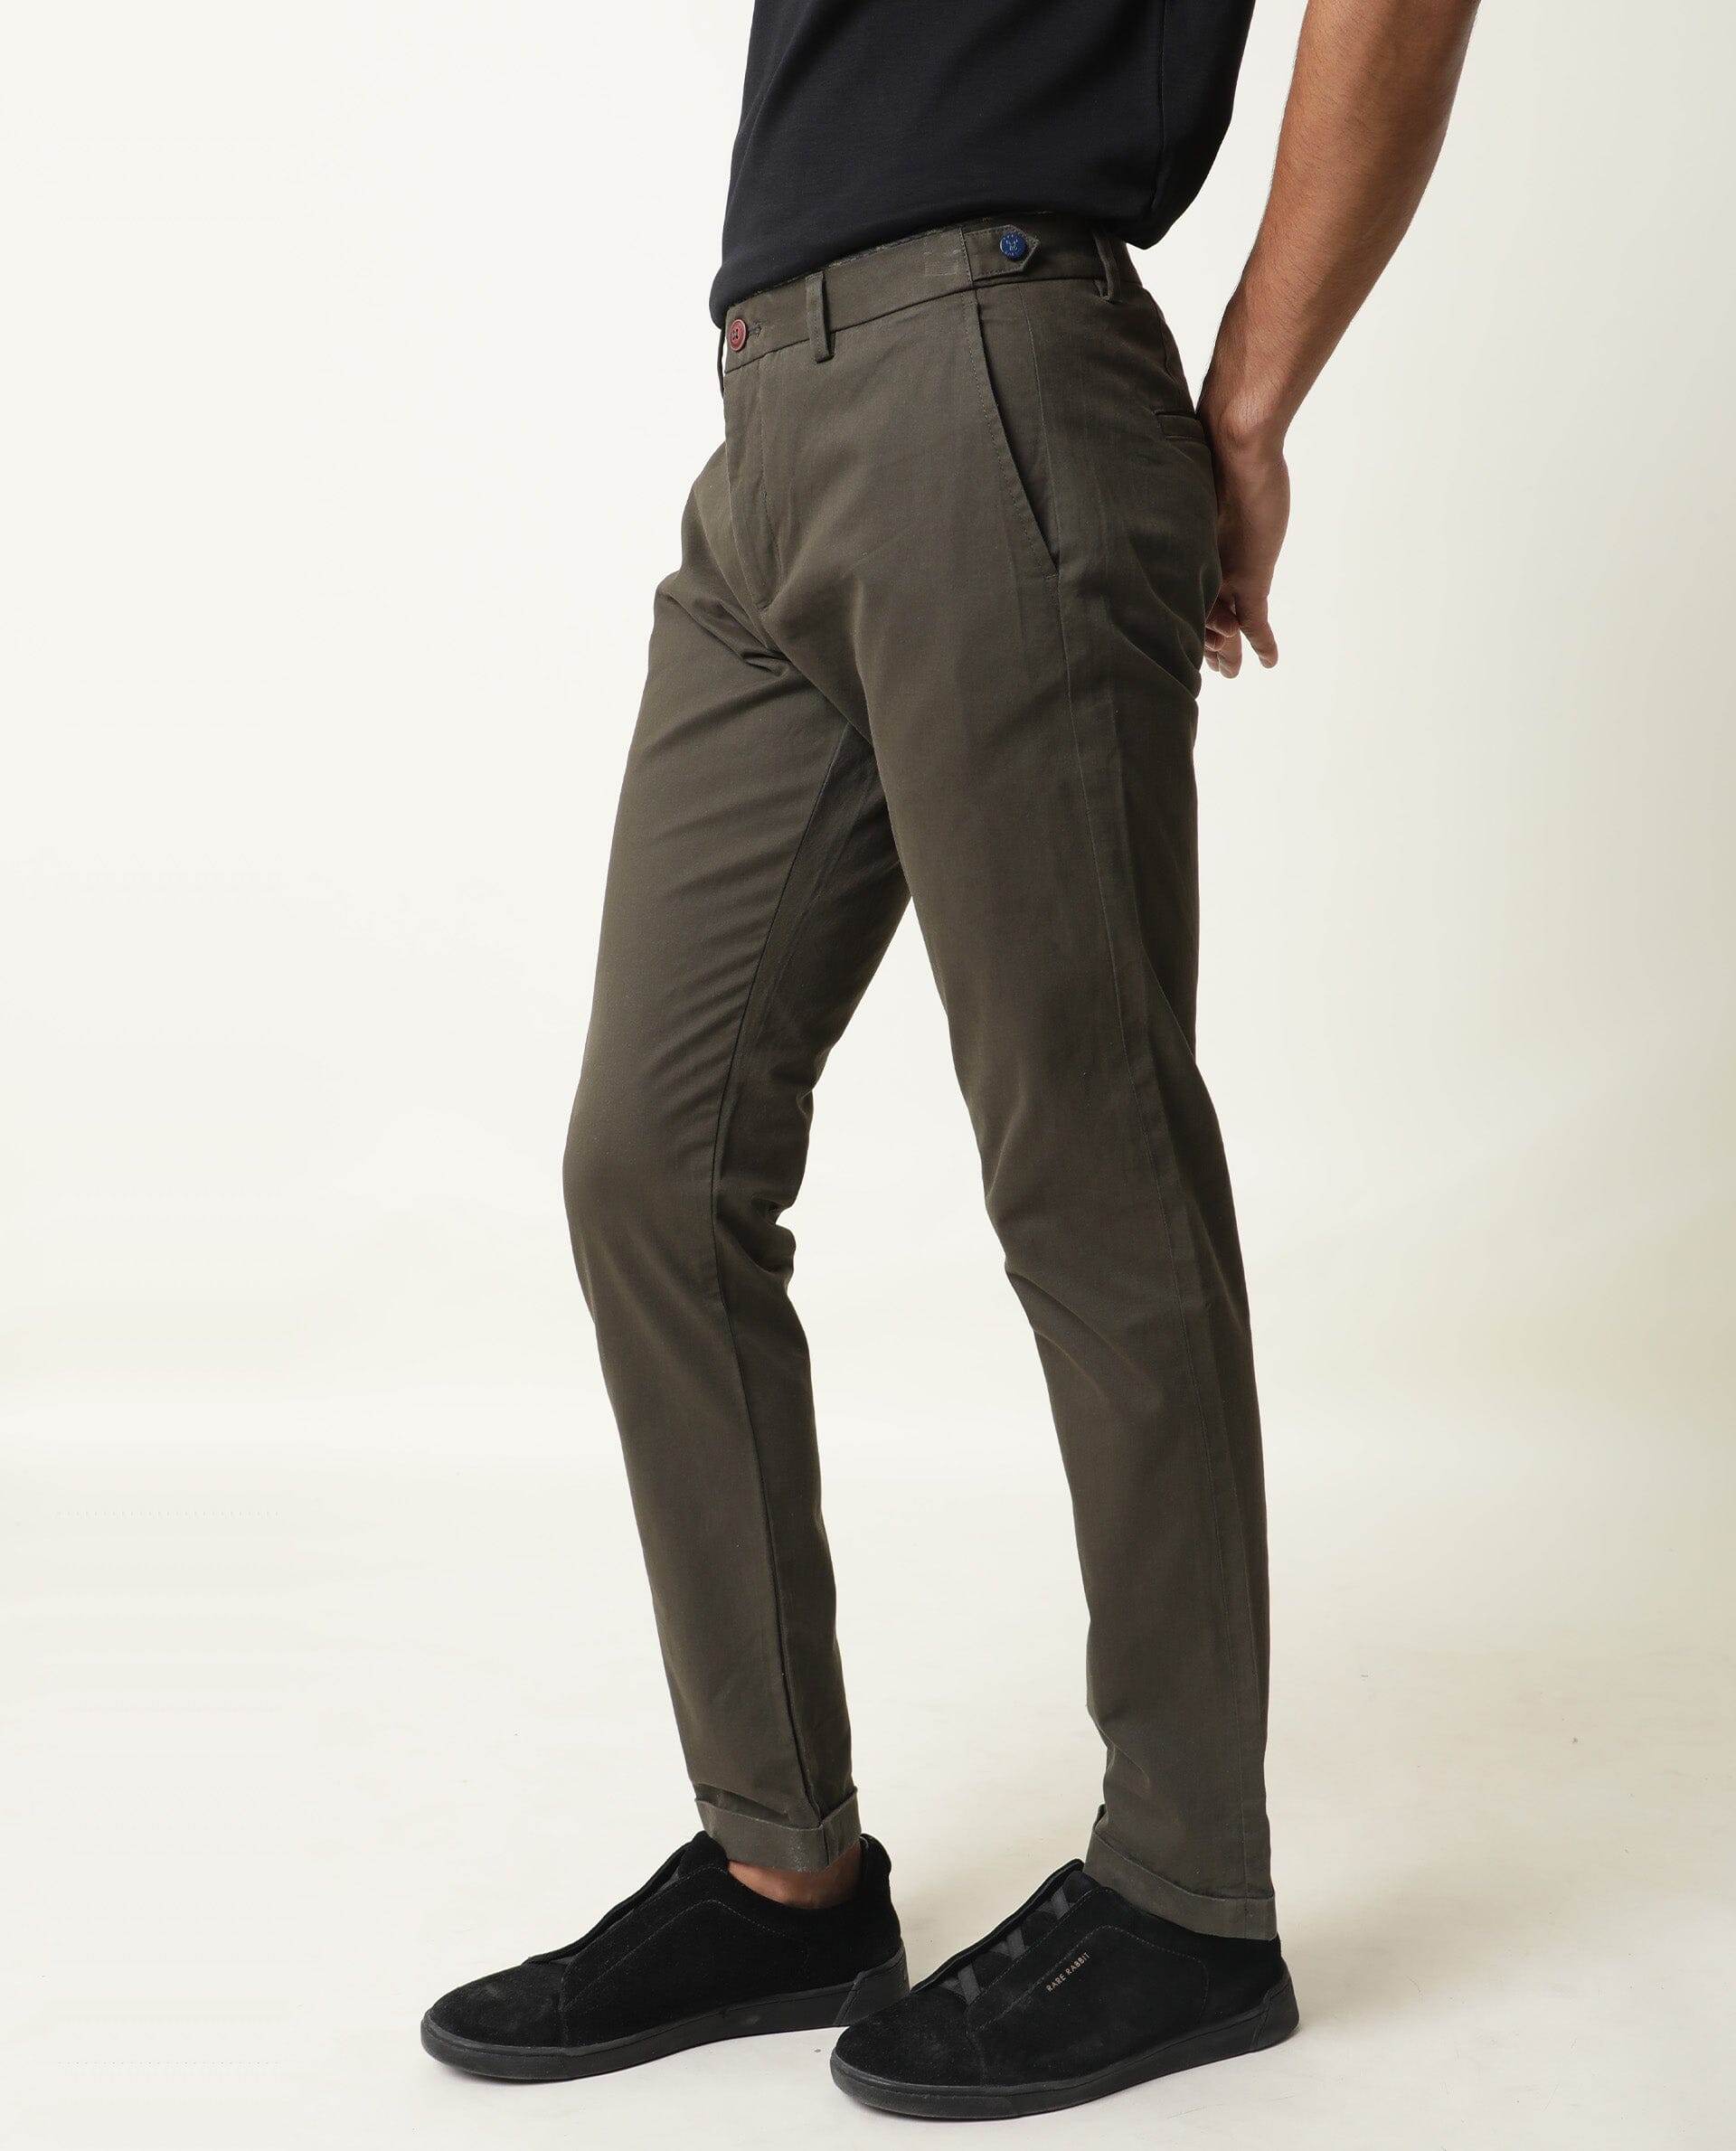 Hugo Boss Suit Trousers | Formal Trousers for Men